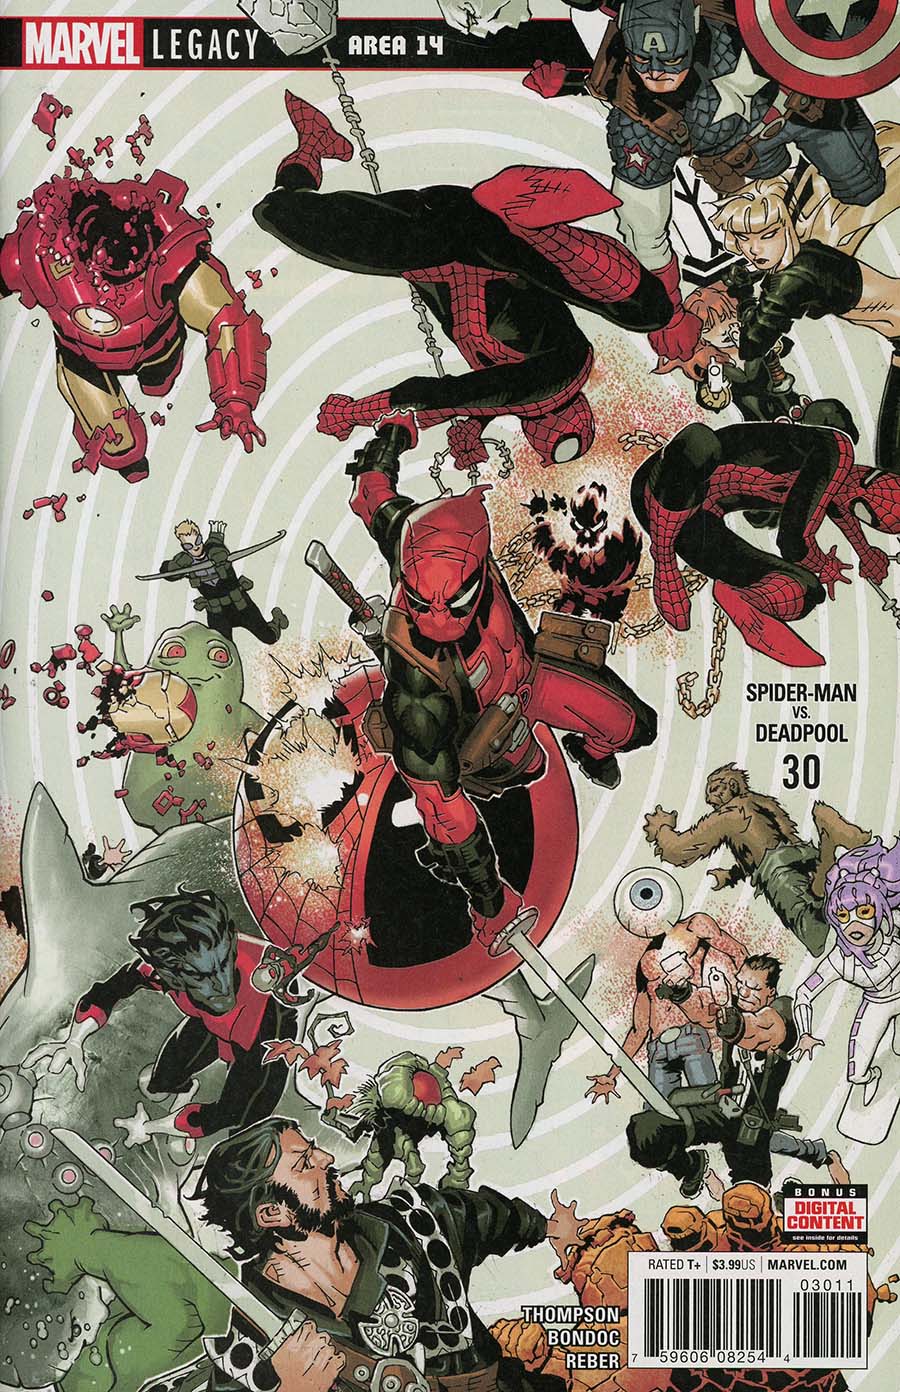 Spider-Man Deadpool #30 (Marvel Legacy Tie-In)